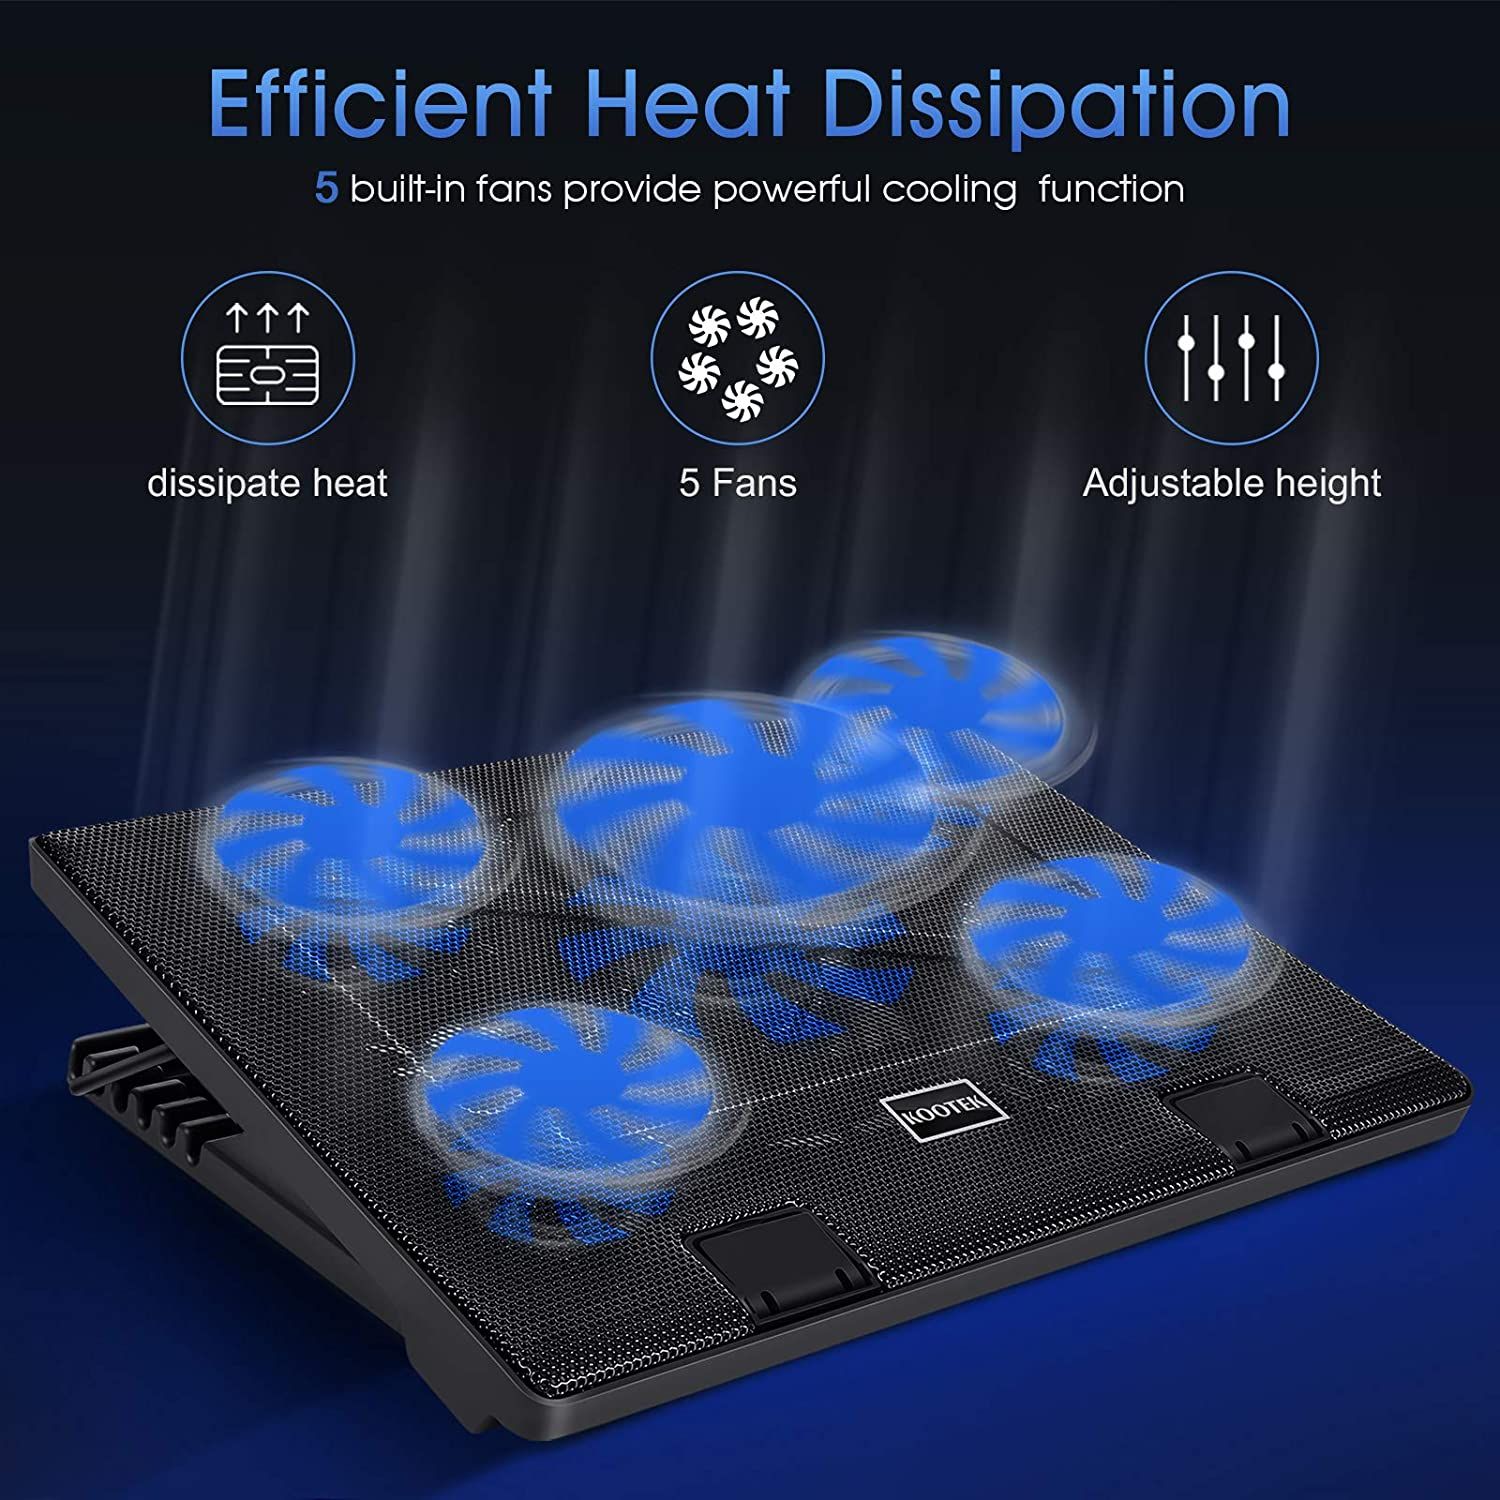 Kootek Laptop Cooling Pad heat features